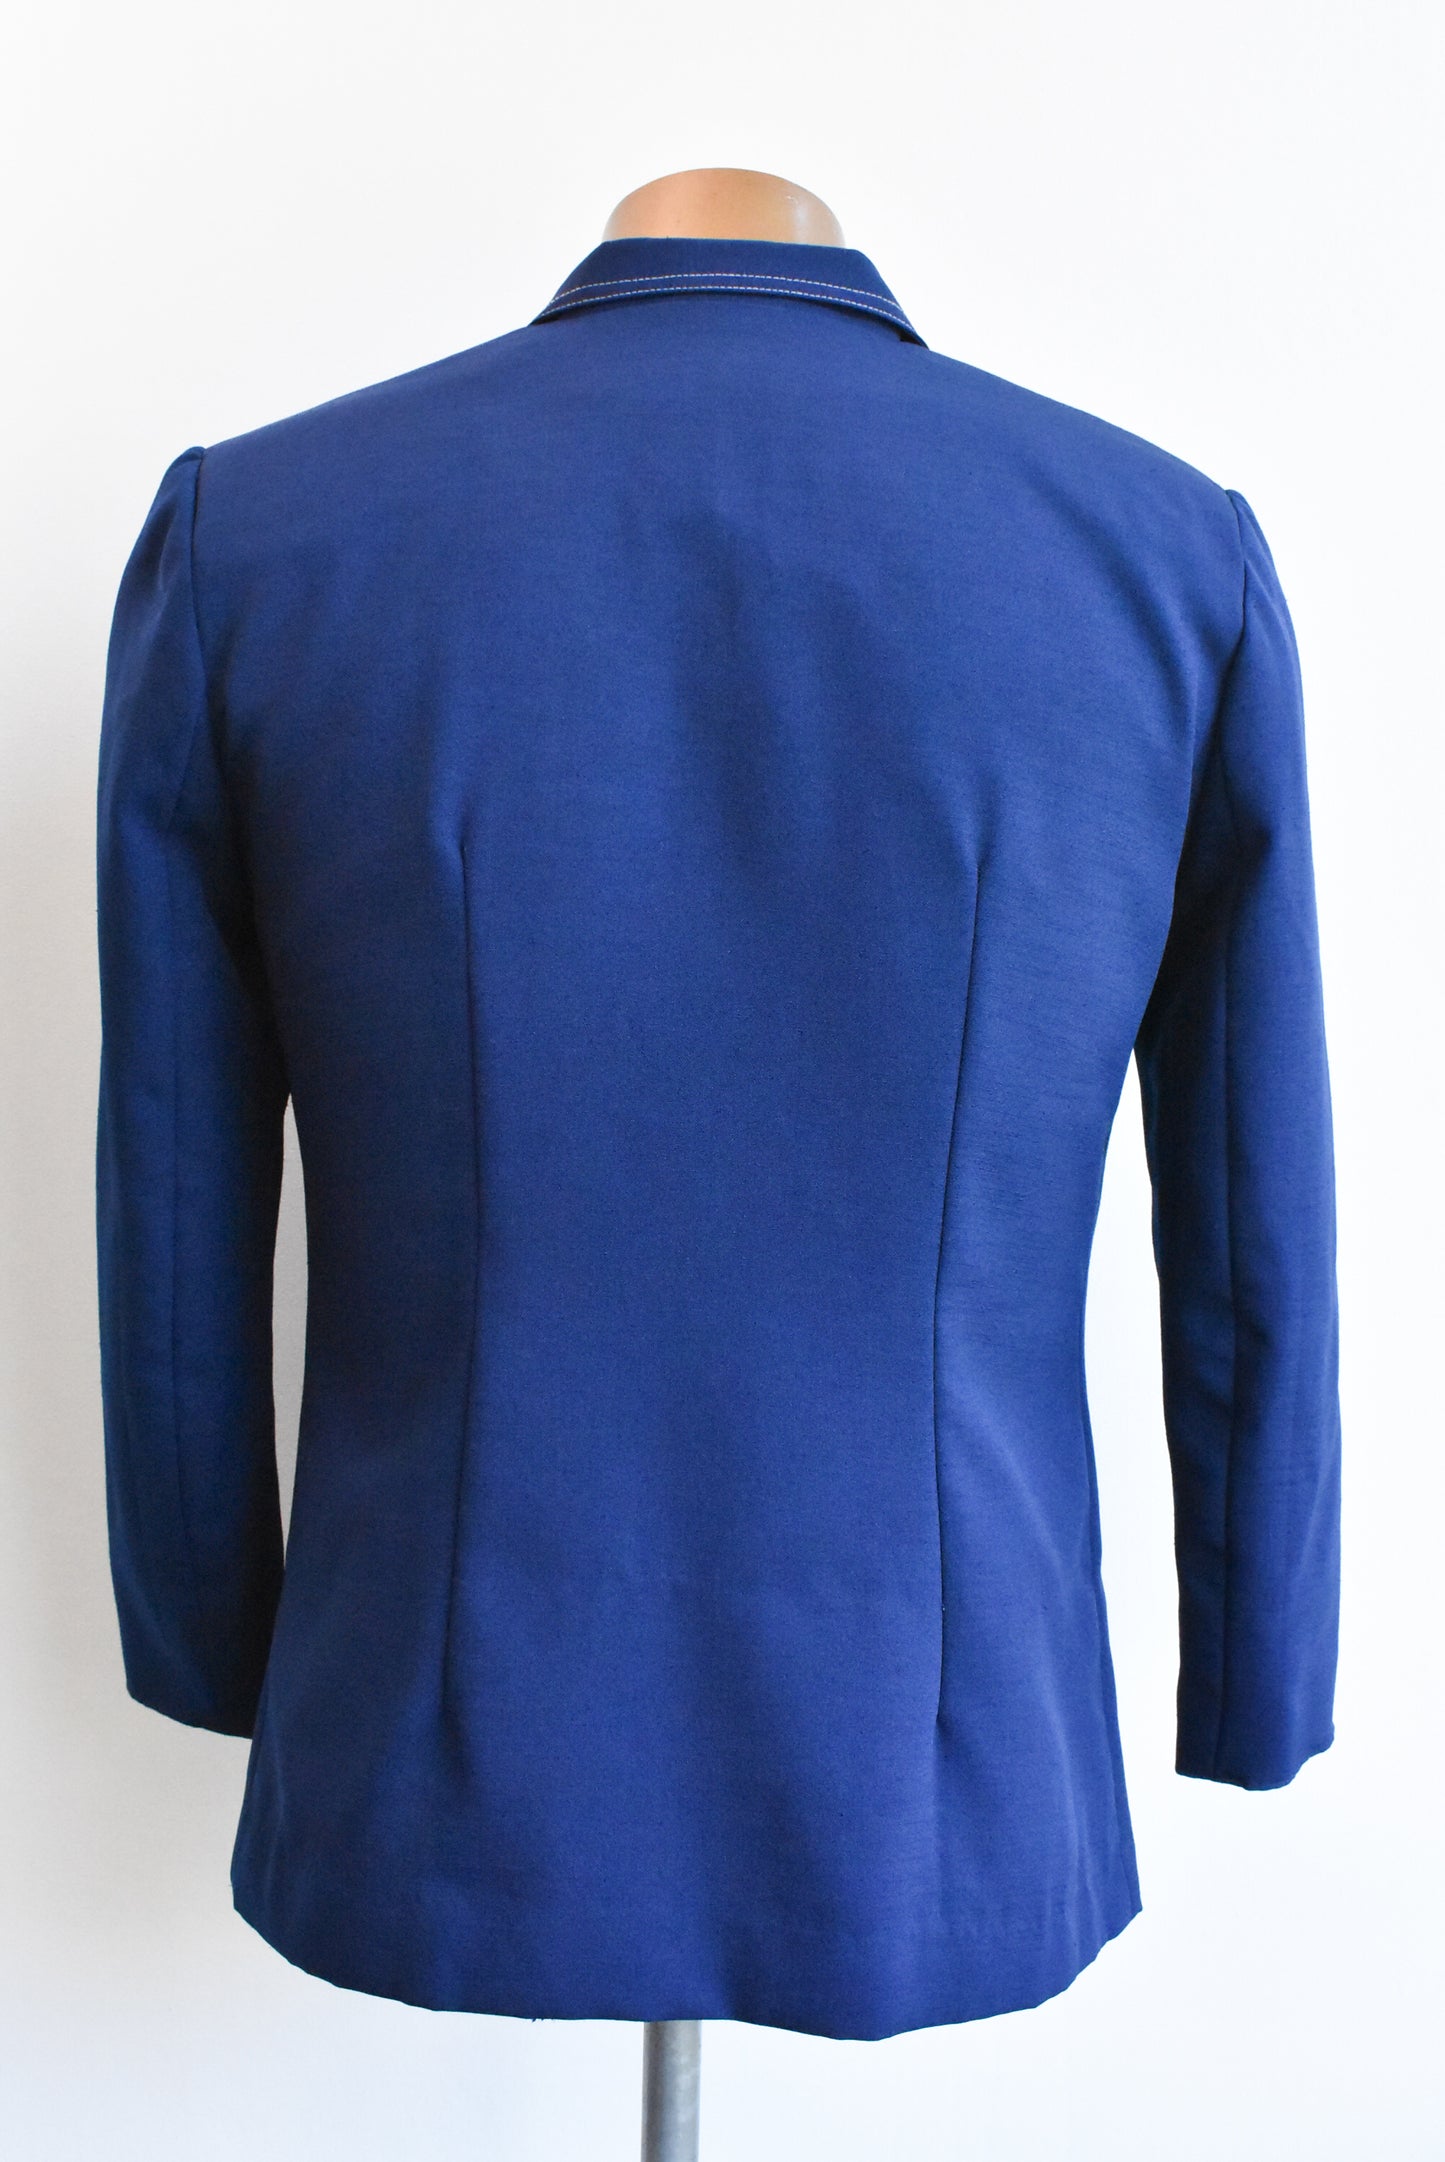 Exclusive retro blue blazer, size S